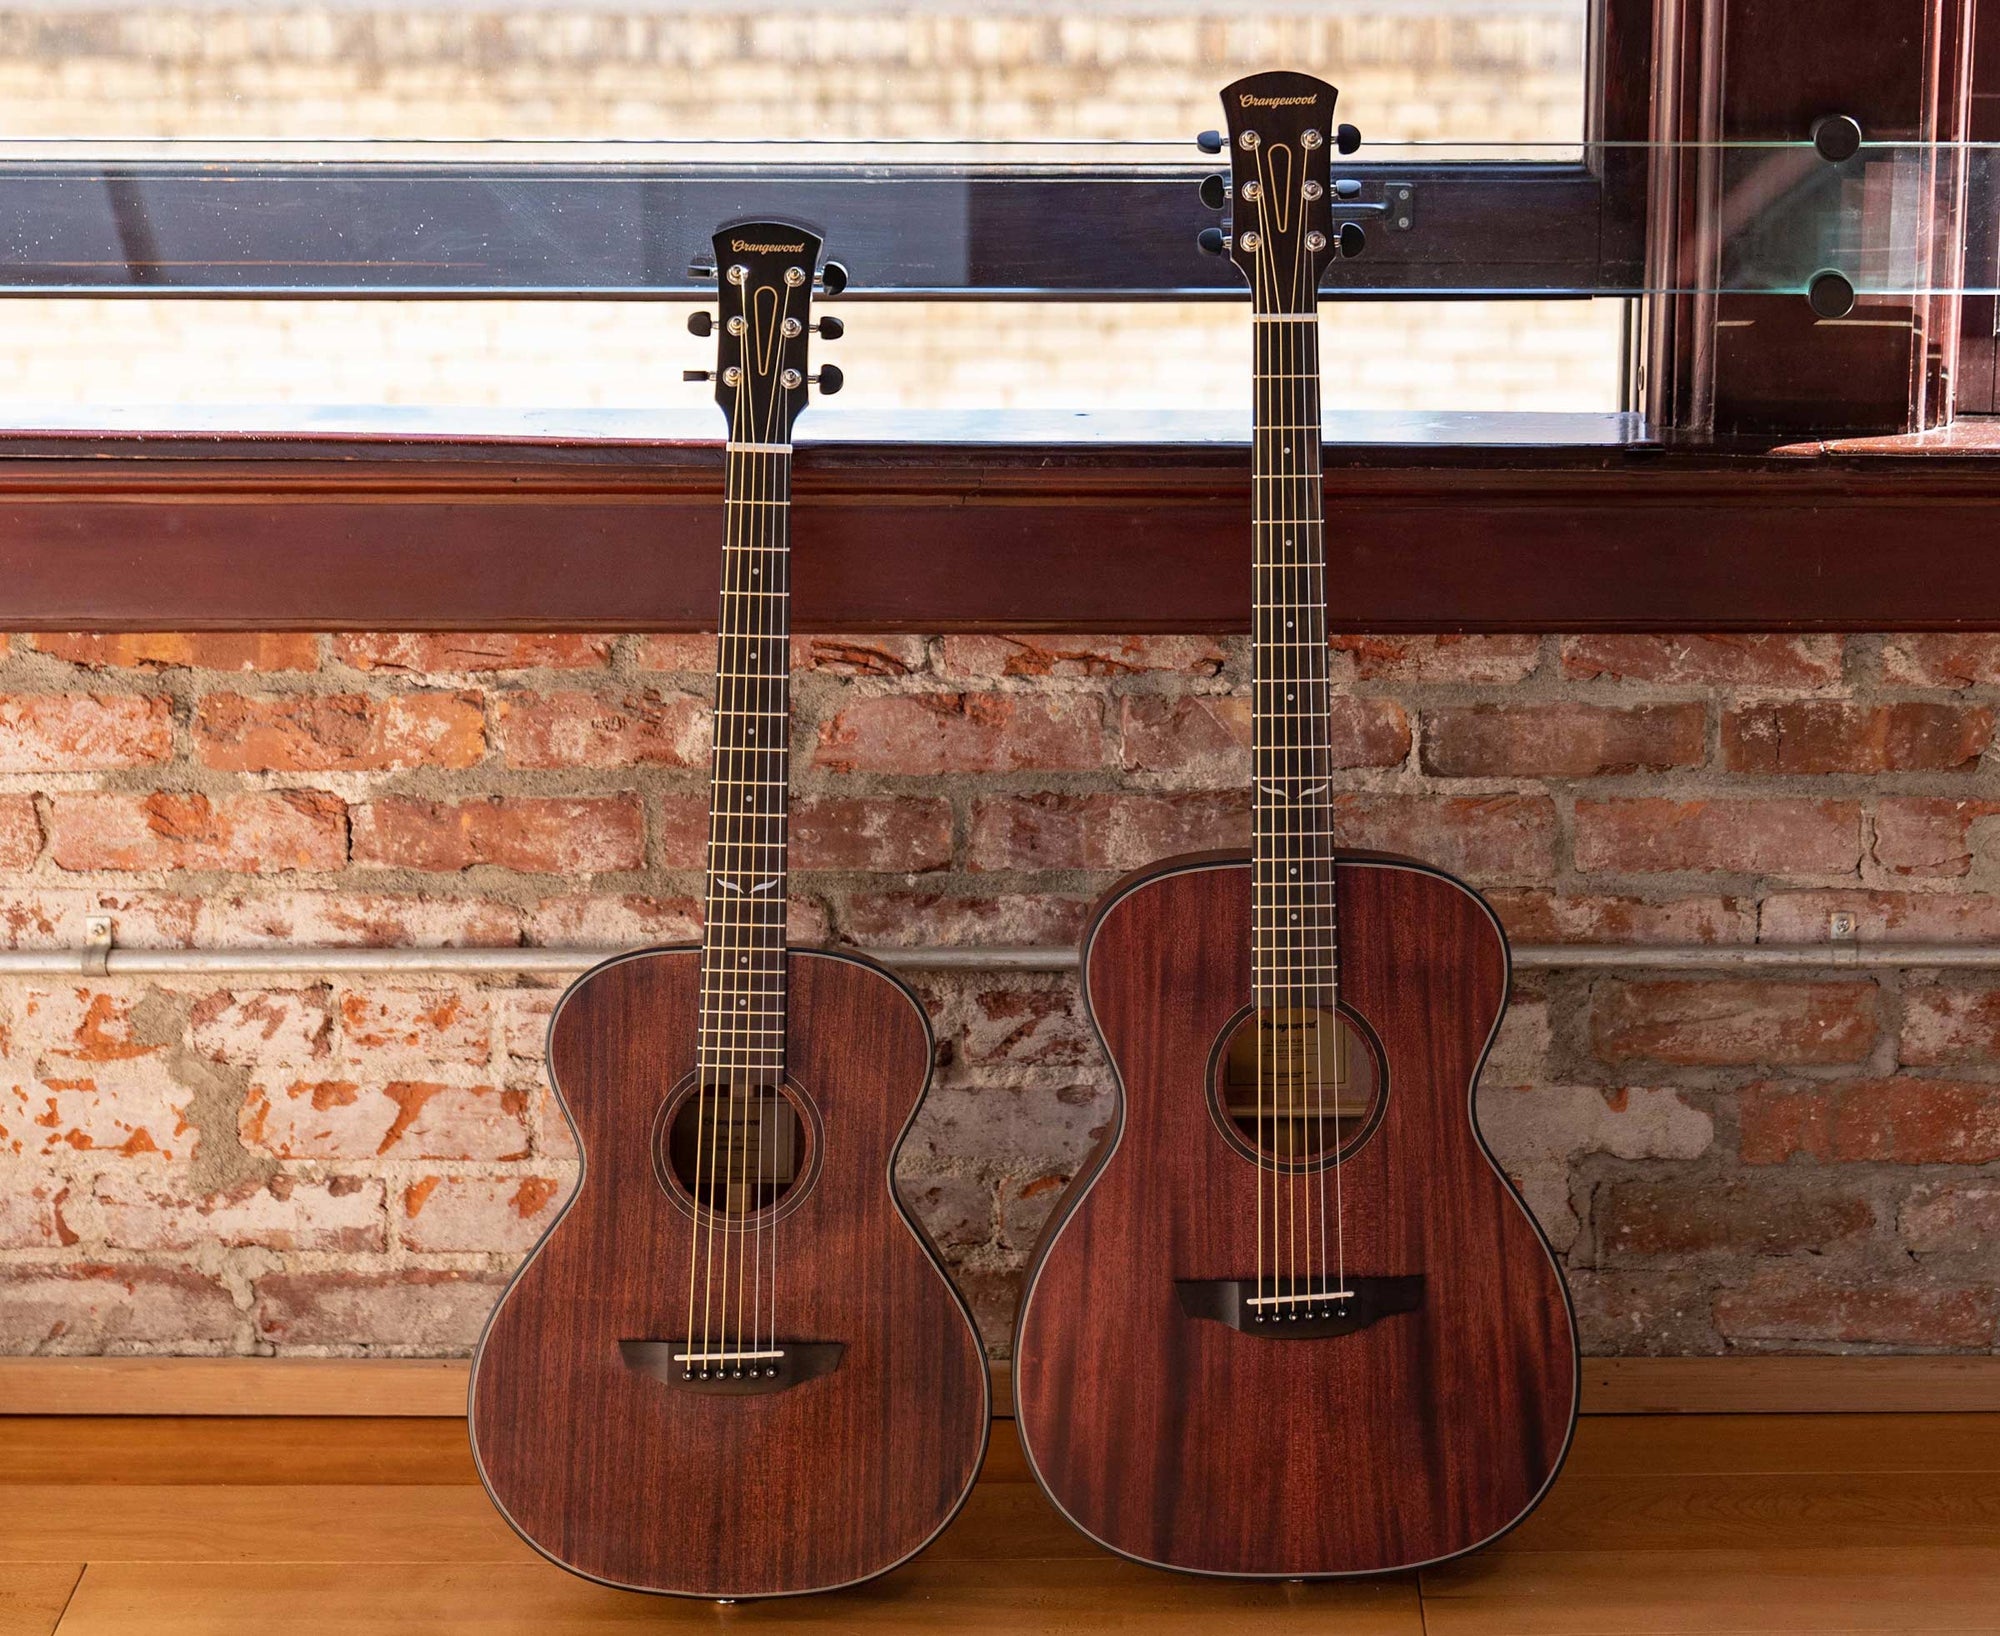 Two Mahogany Orangewood guitars leaned against a brick wall